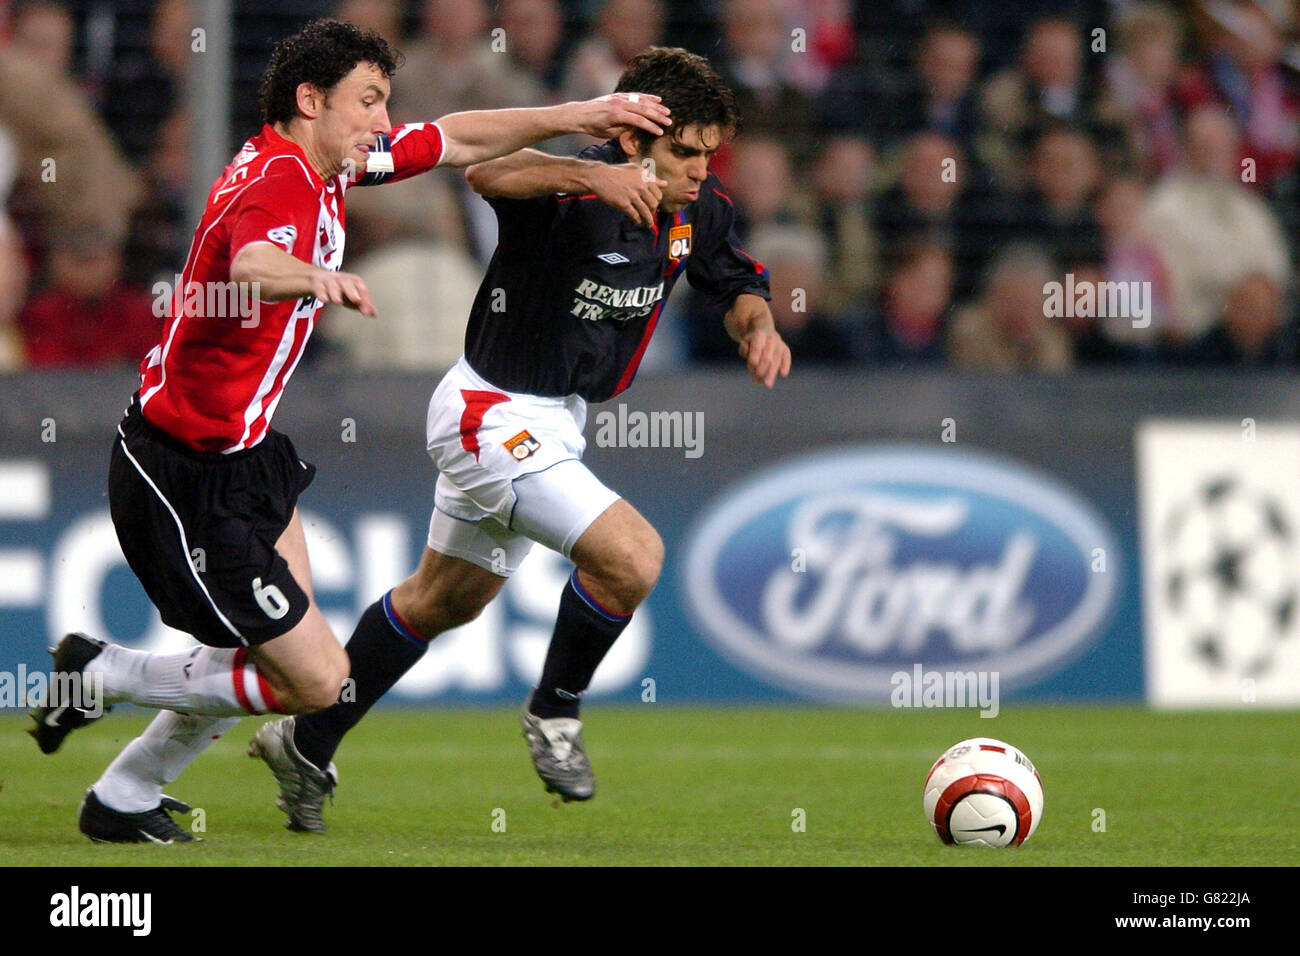 PSV Eindhoven's Mark Van Bommel and Olympique Lyonnais' Juninho Pernambucano (r) battle for the ball Stock Photo